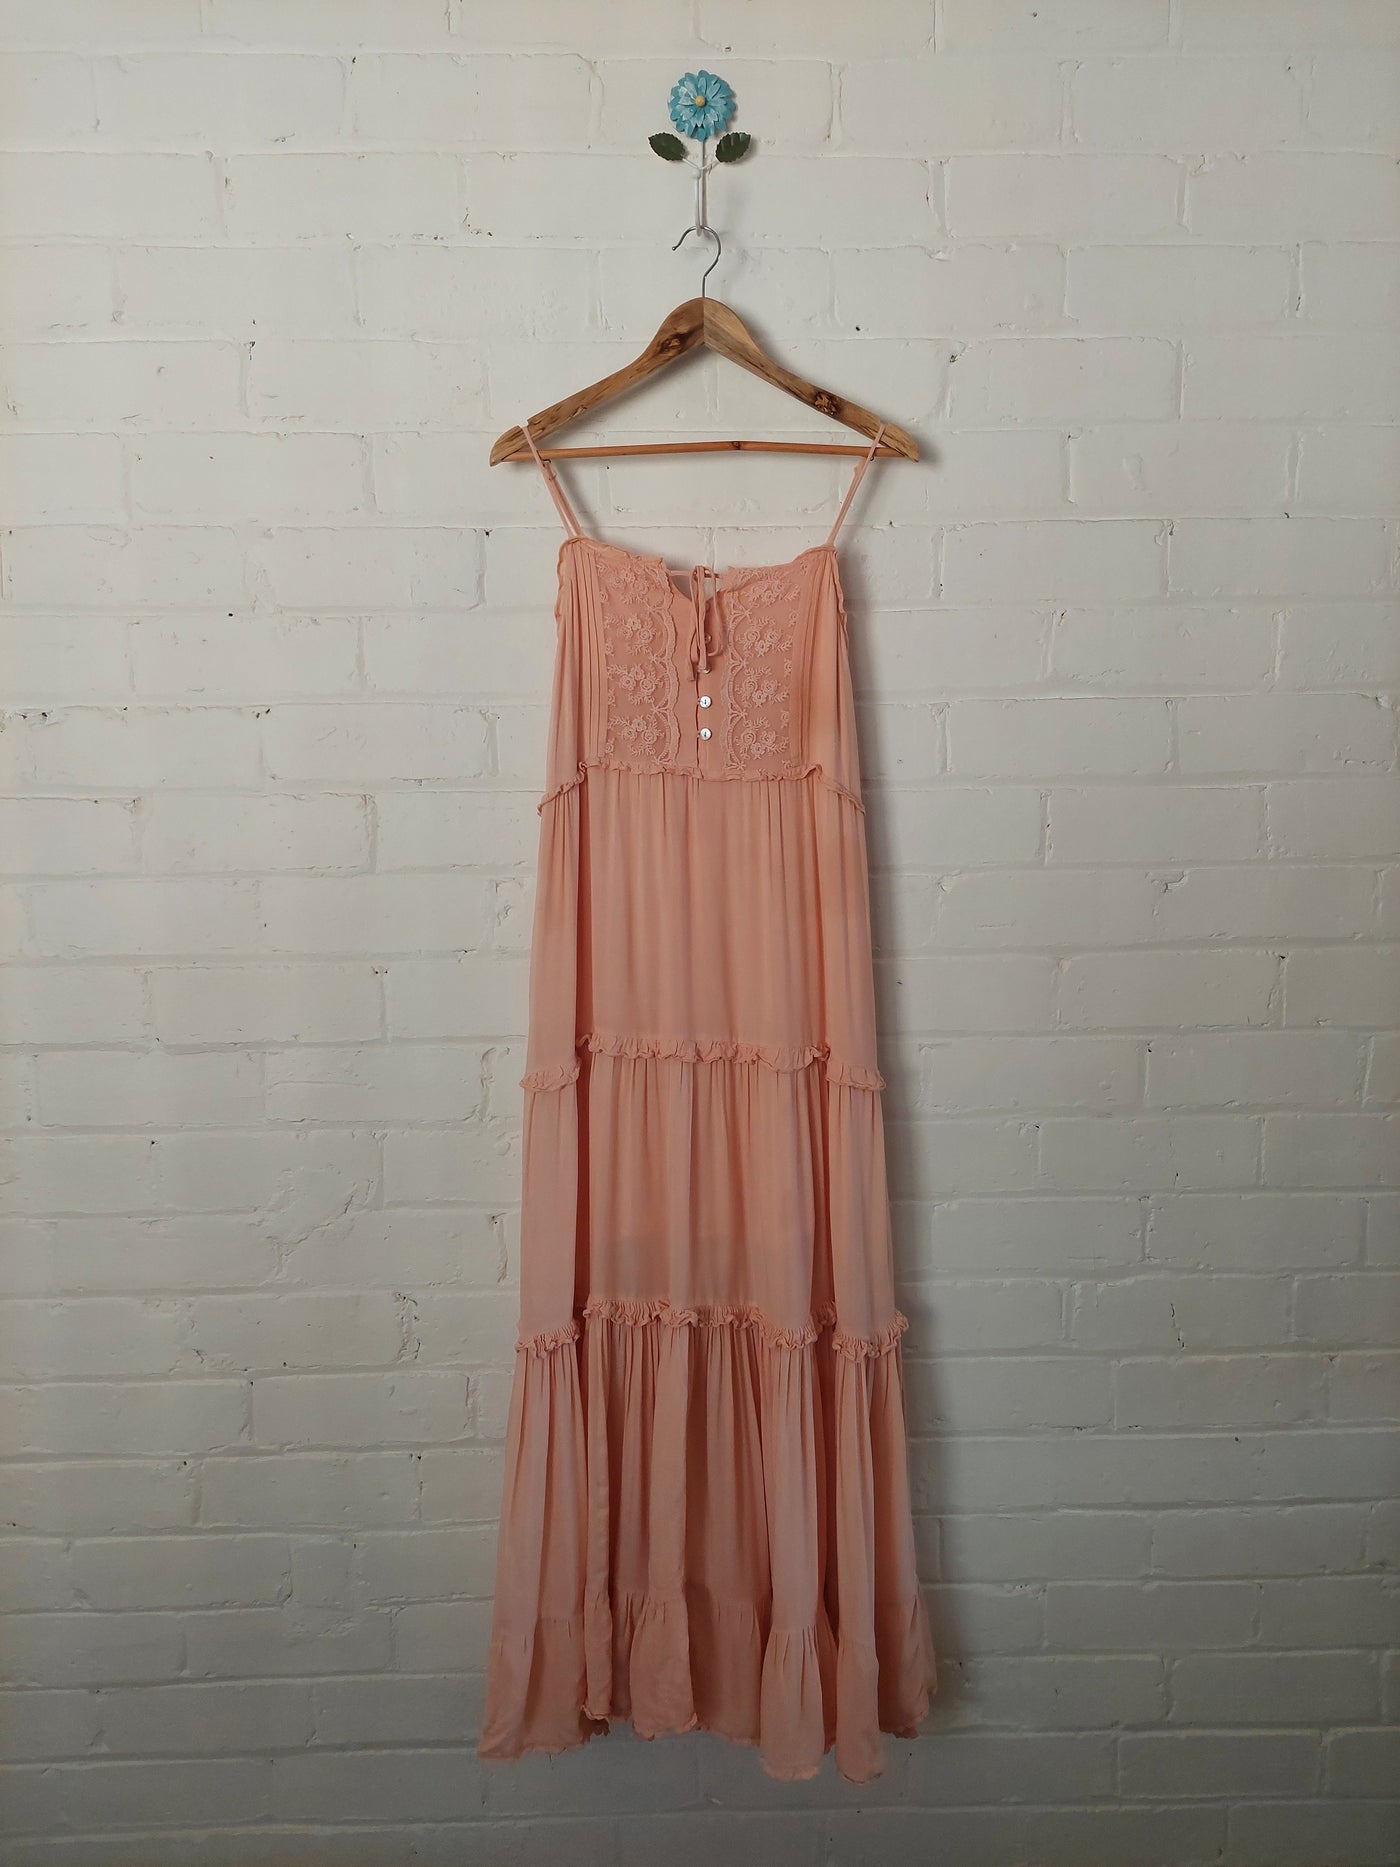 Arnhem Clothing Lover Maxi Sundress in Peach Pearl, Size 8